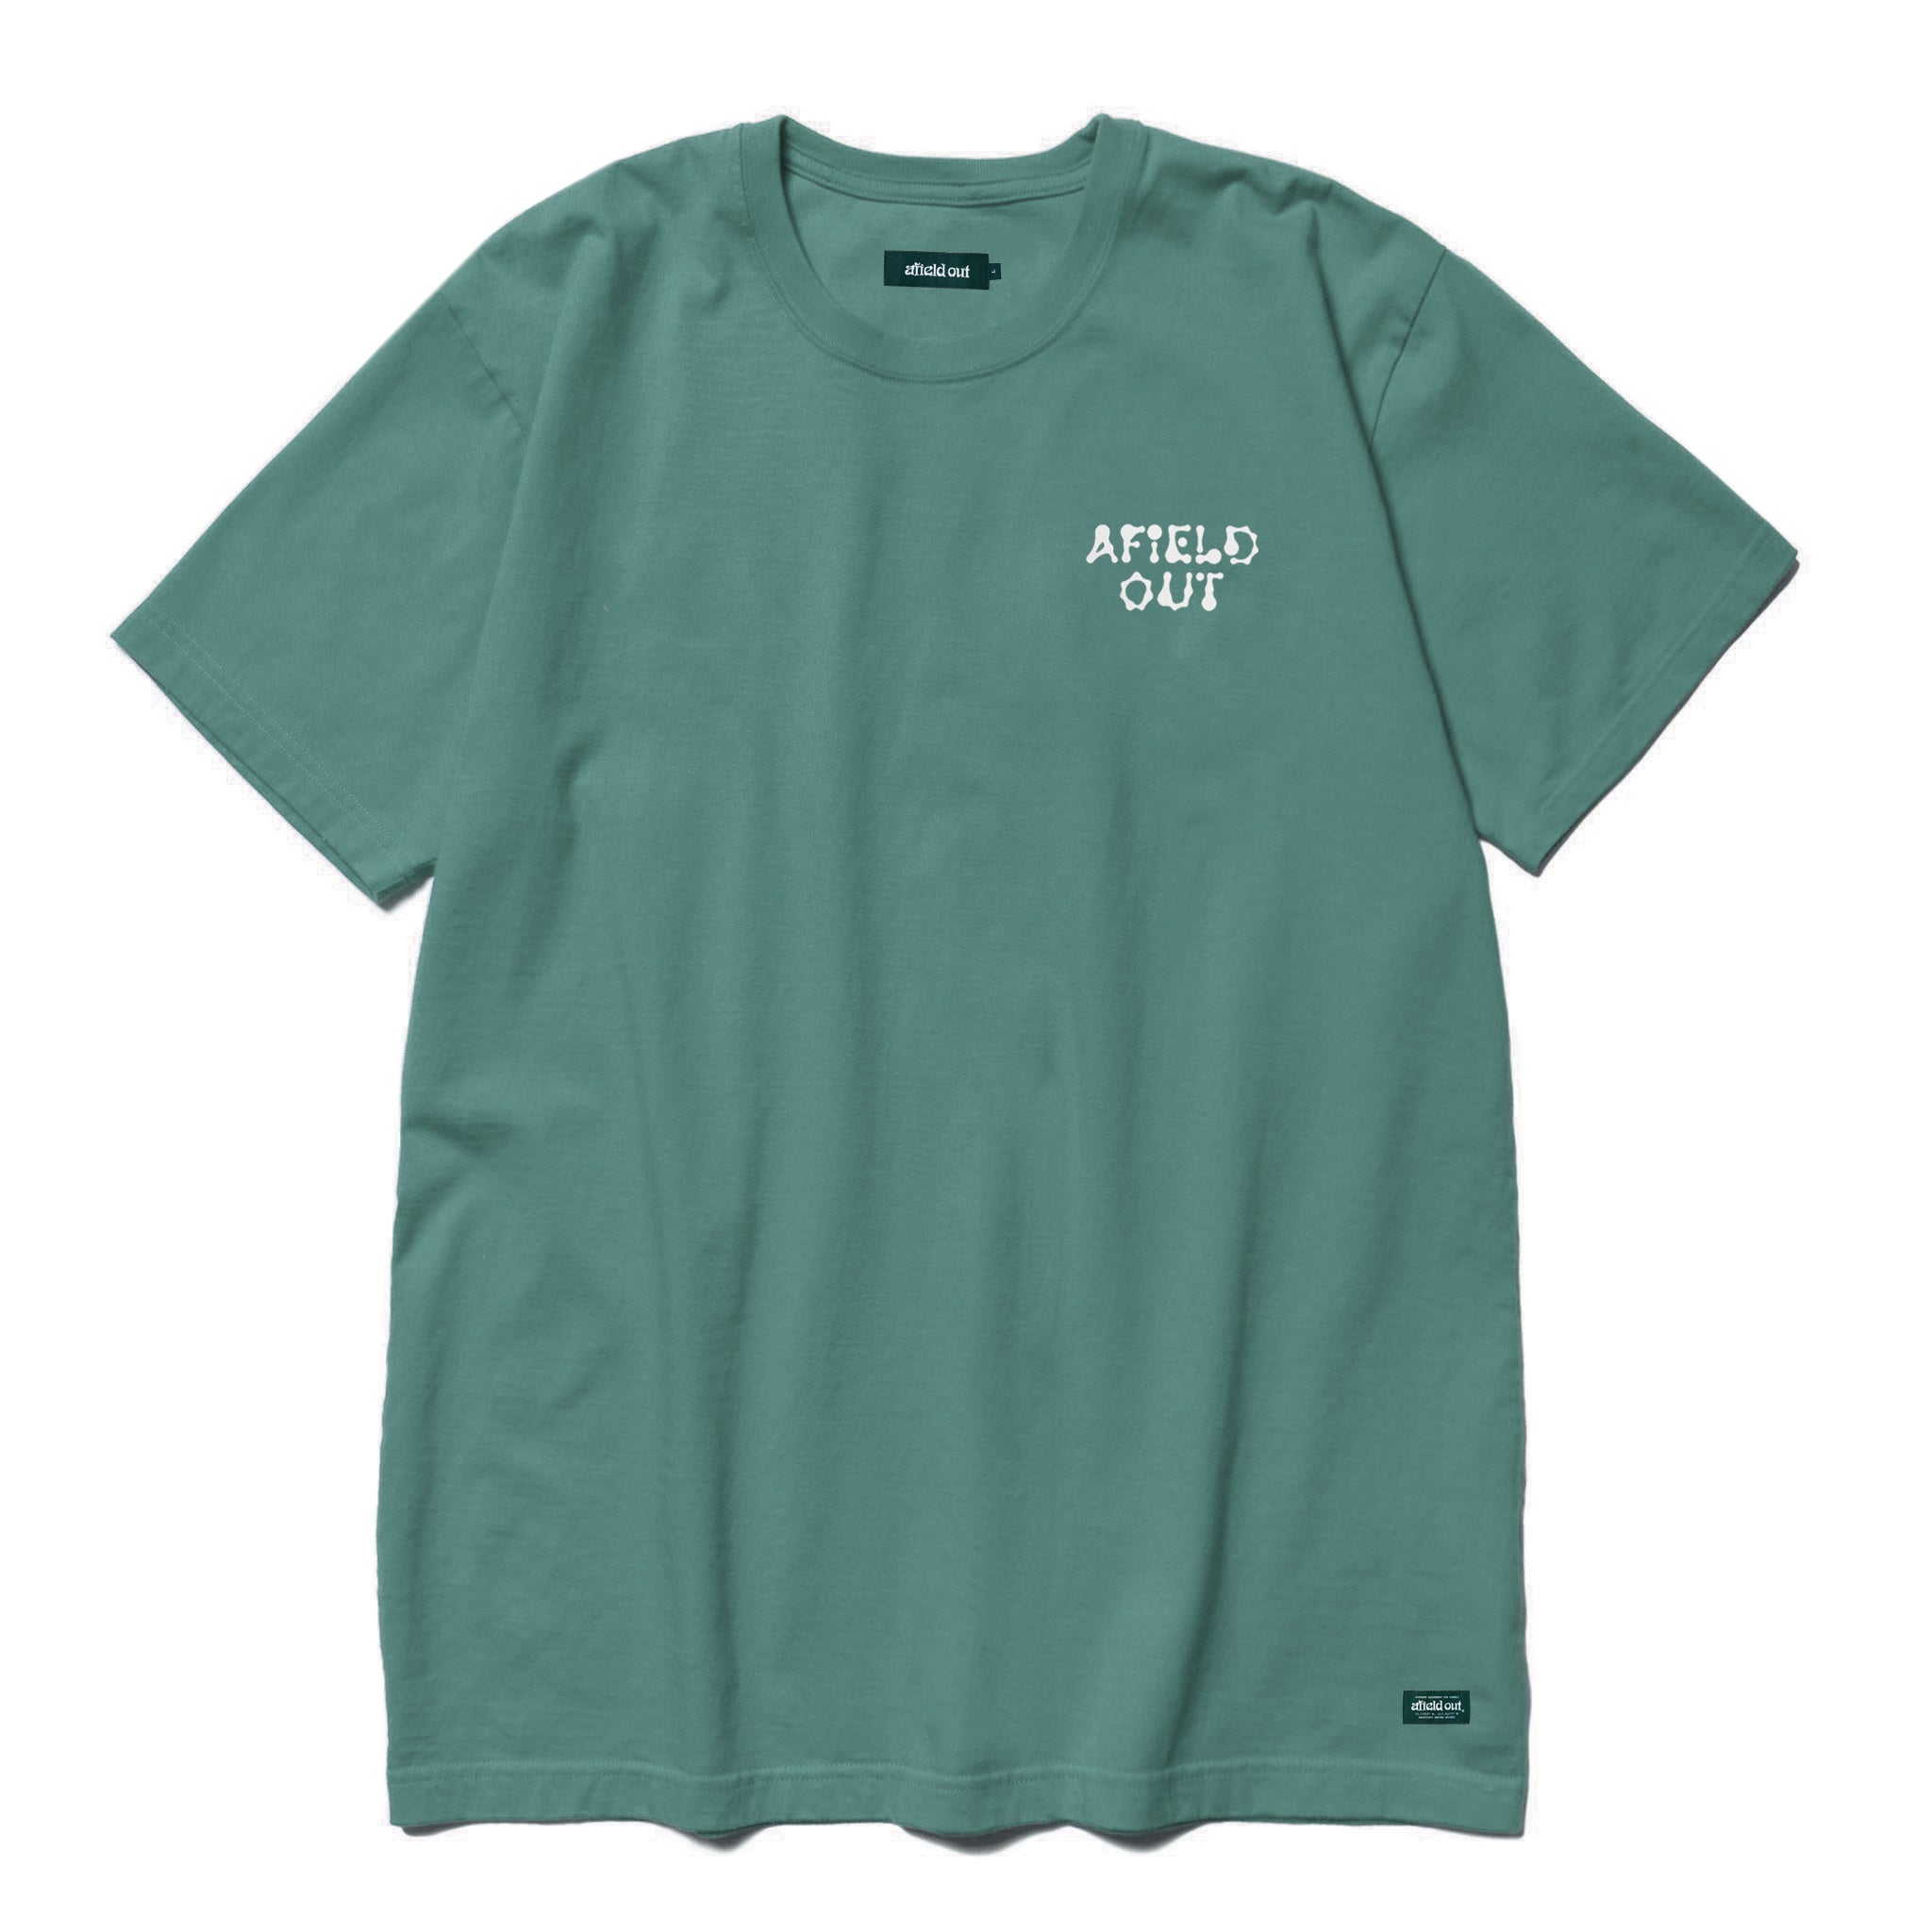 Teal Ripple T-Shirt